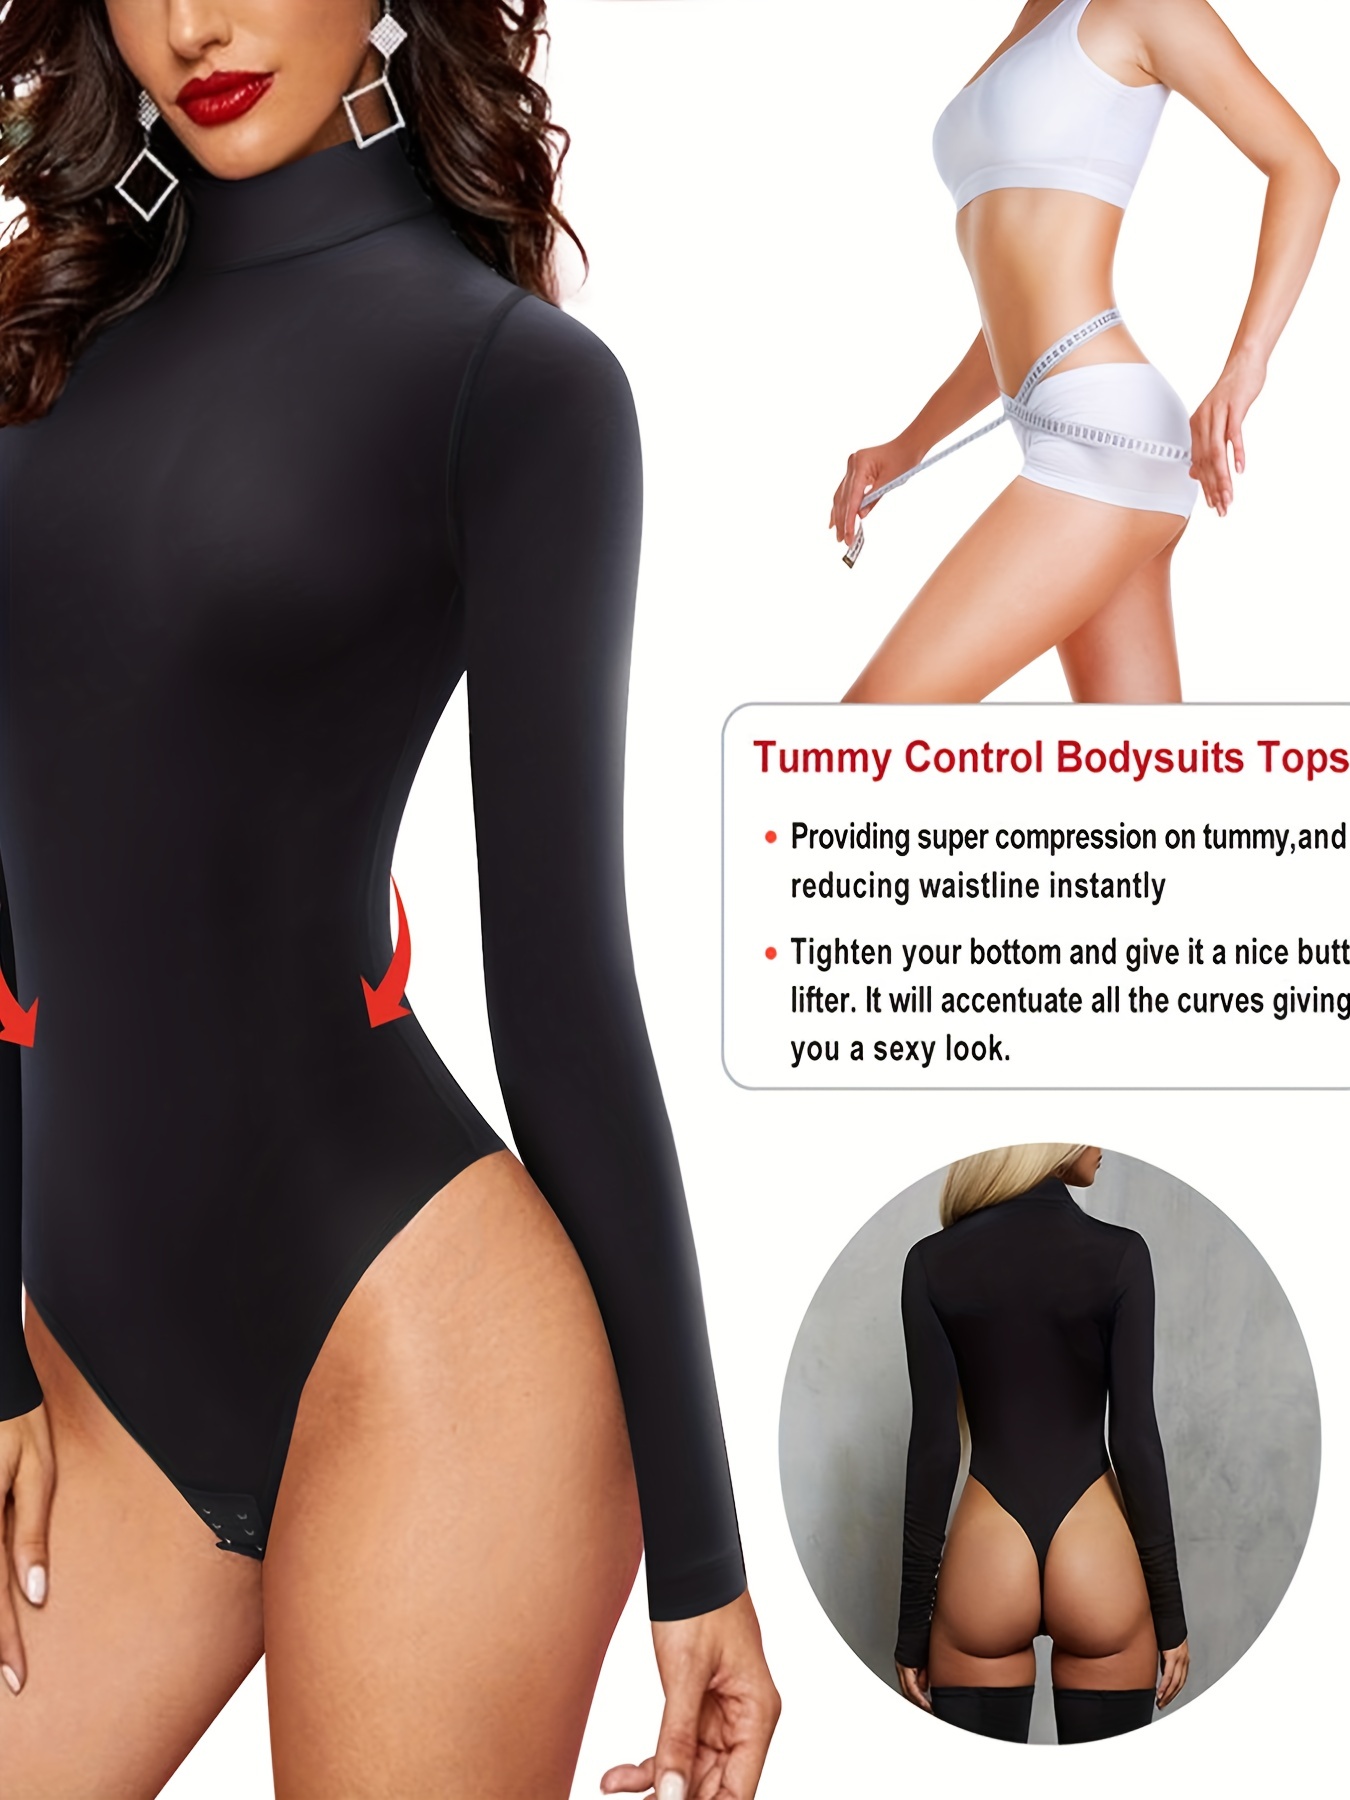 Long Sleeve Women Bodysuit/ Sexy Women's Black Bodysuit/ Top Blouse Bodysuit  